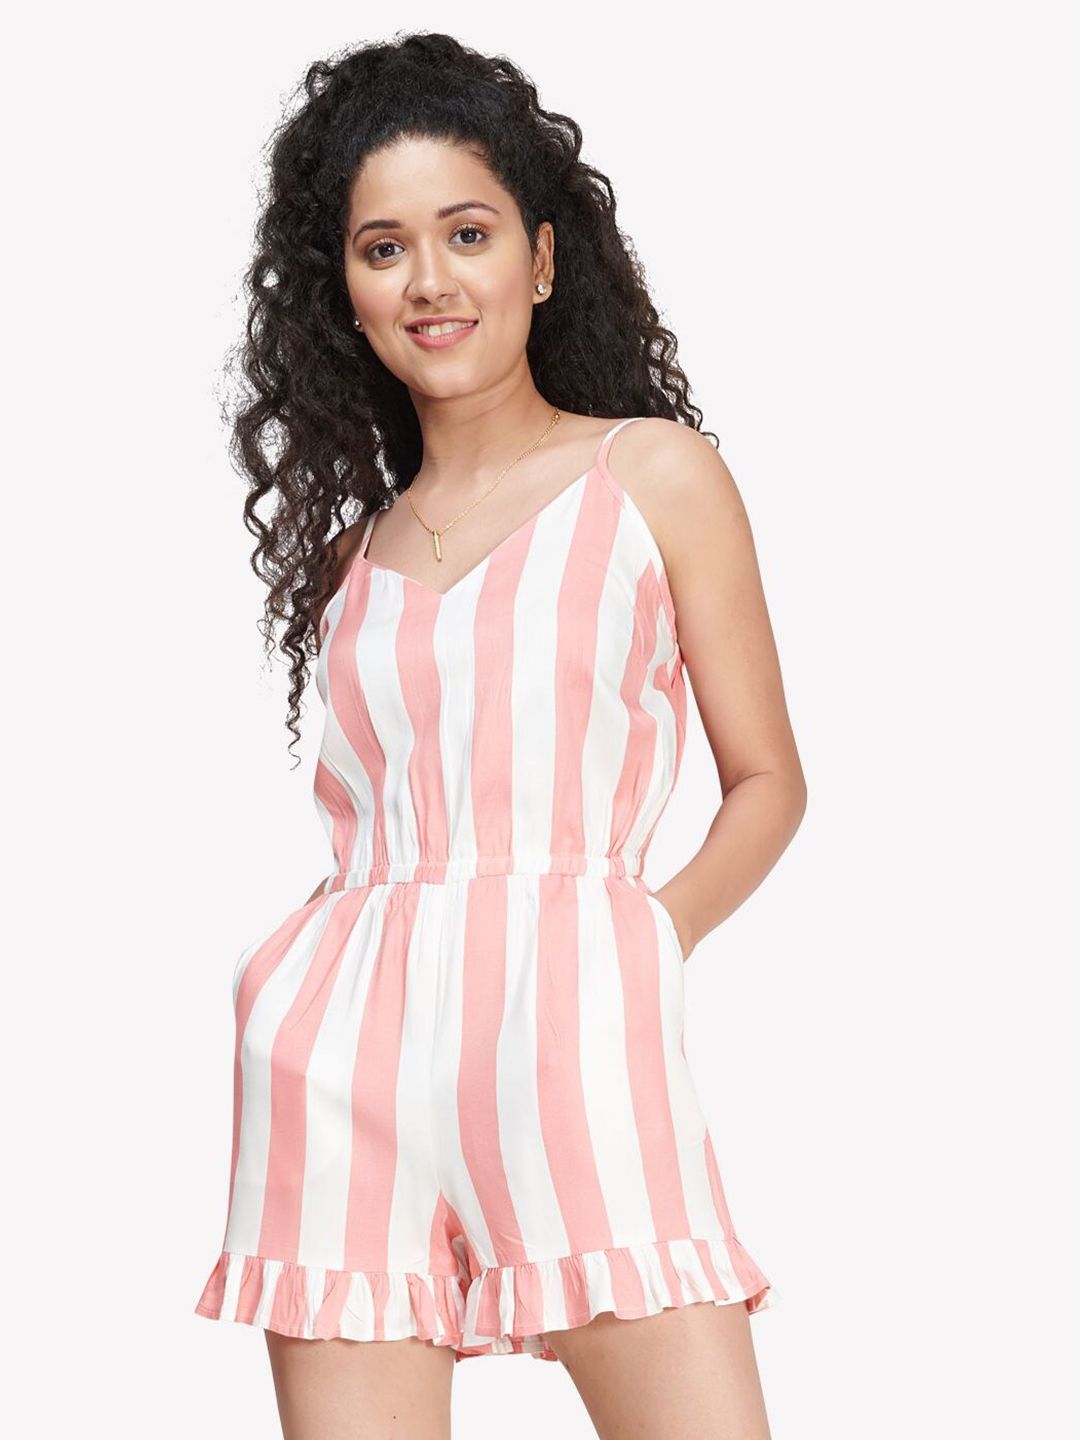 VASTRADO White & Pink Striped Cotton Playsuit Jumpsuit Price in India